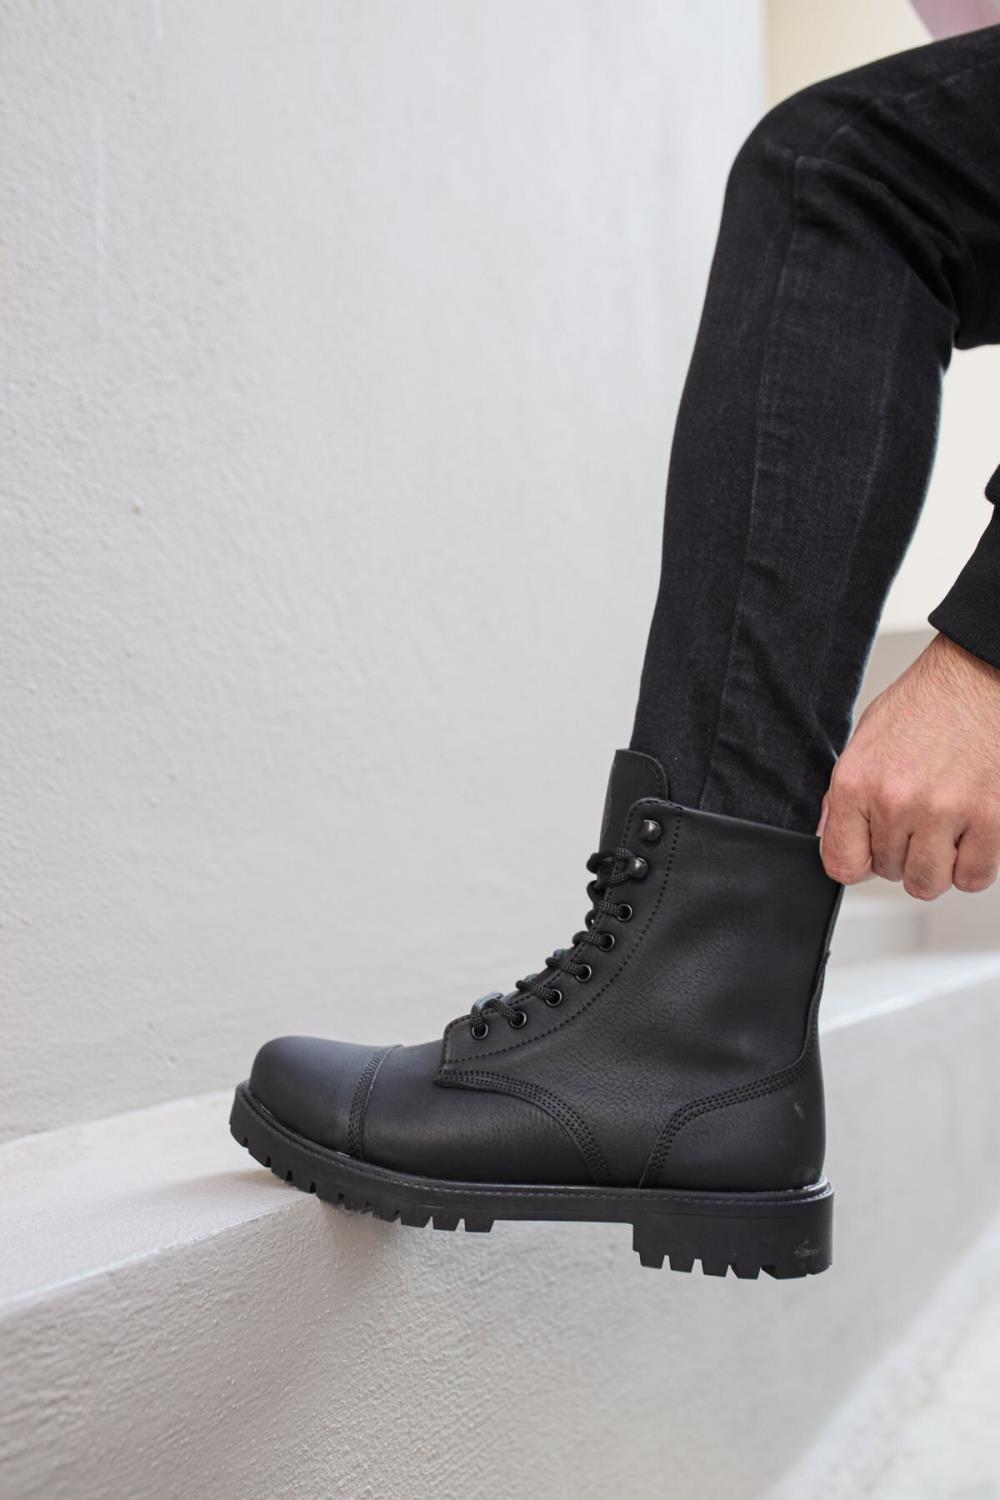 Men's High-Sole Boots B-022 Black (Black Sole) - STREETMODE ™